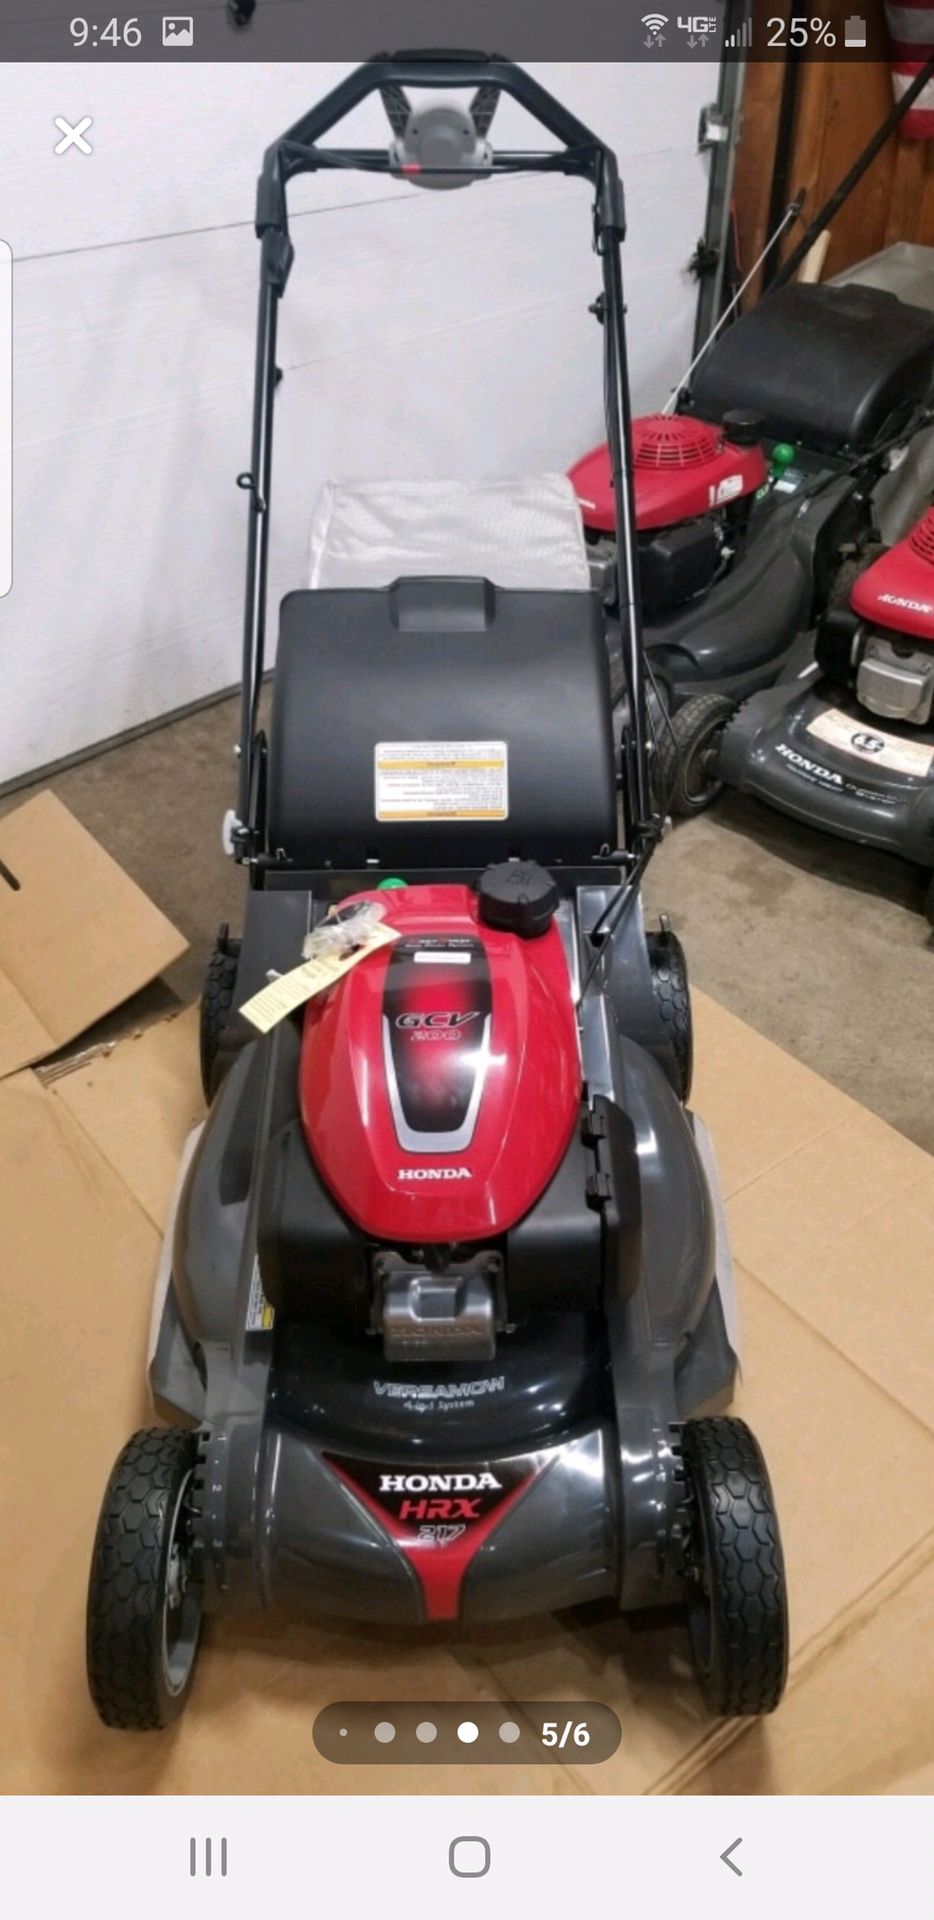 2020 Honda HRX217VKA lawnmower. $550. Warranty included.